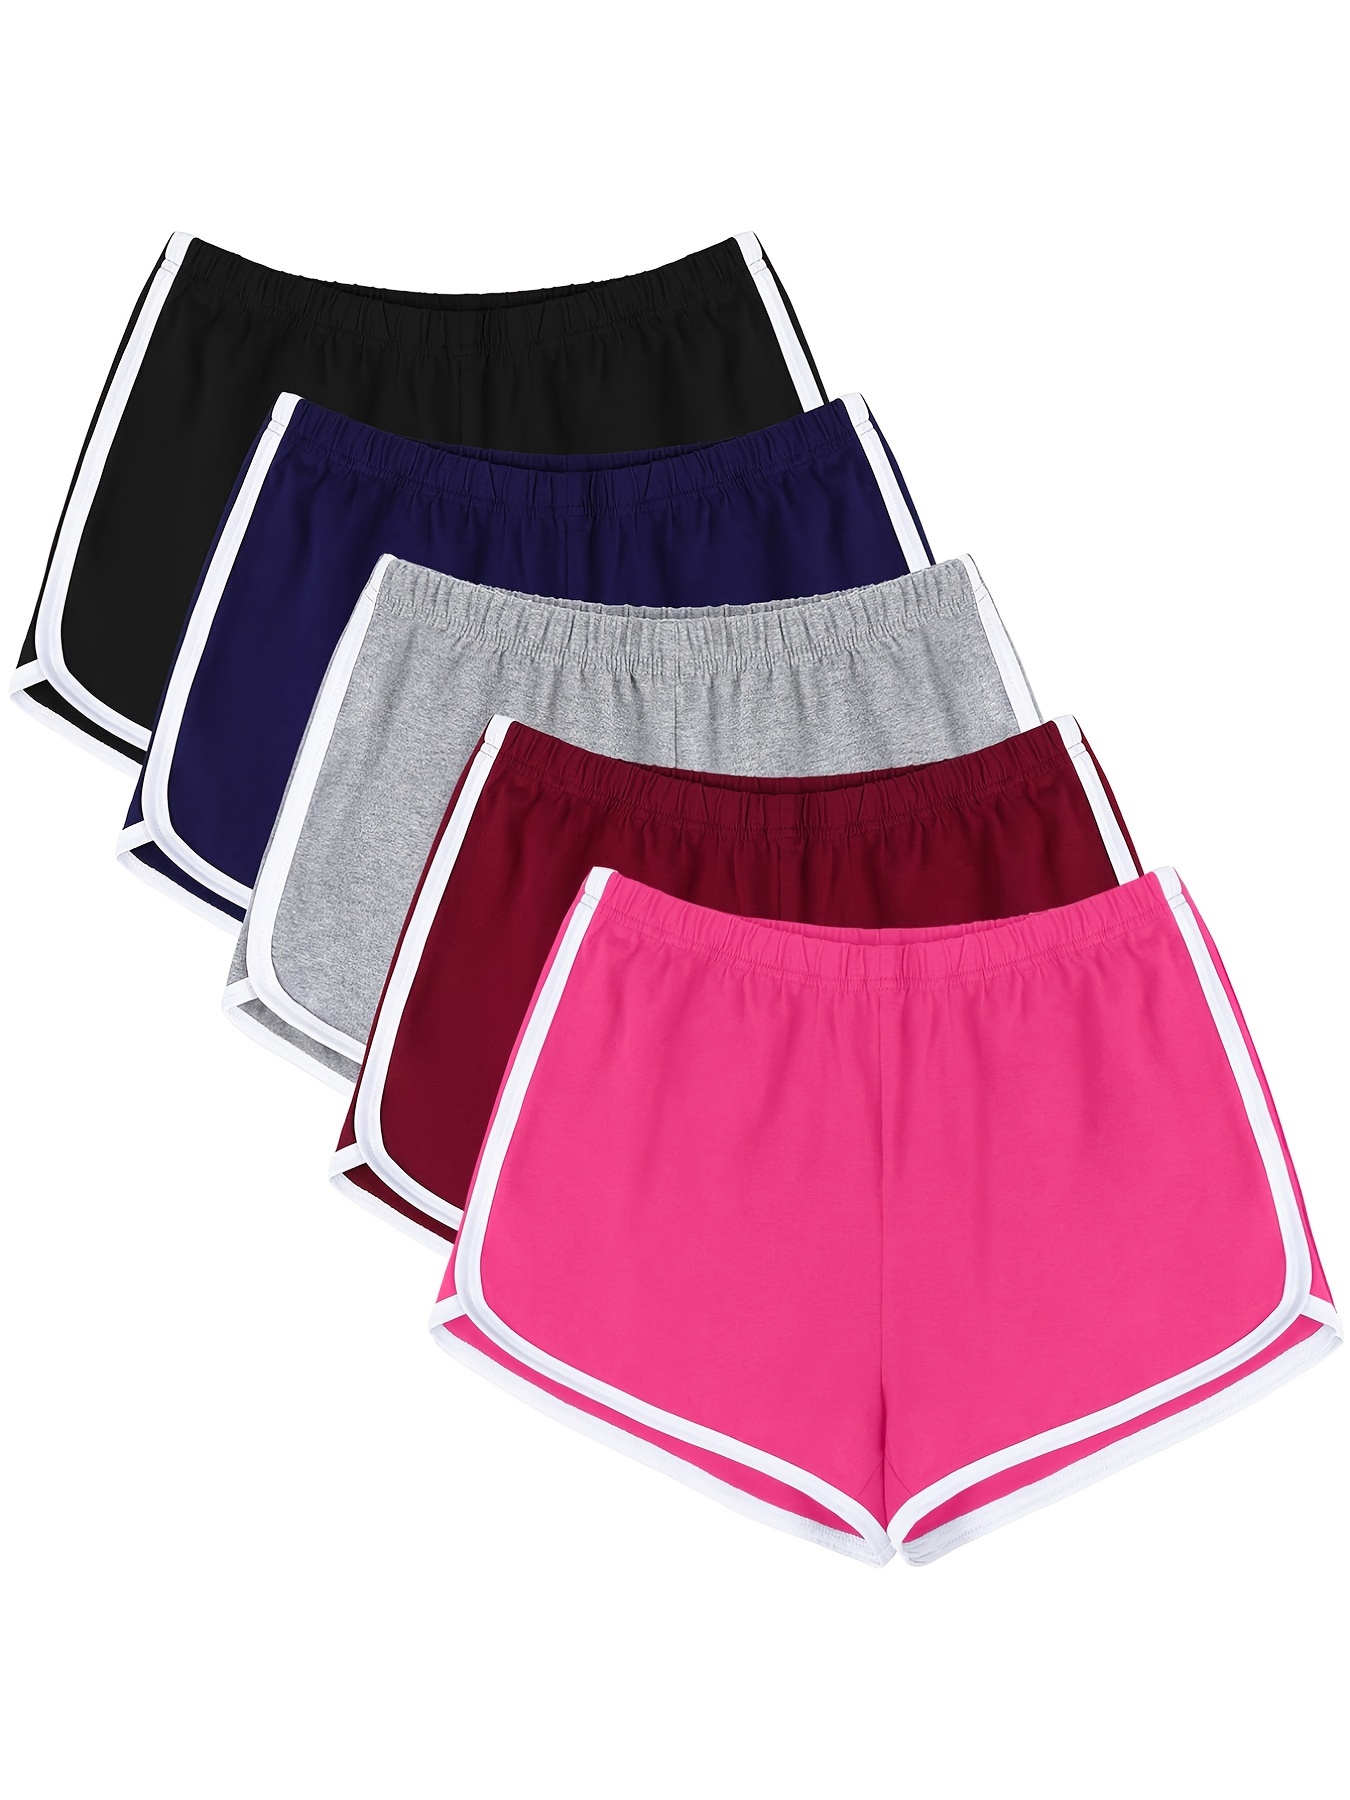 Cotton Sport Shorts Yoga Dance Short Pants Summer Athletic Shorts 